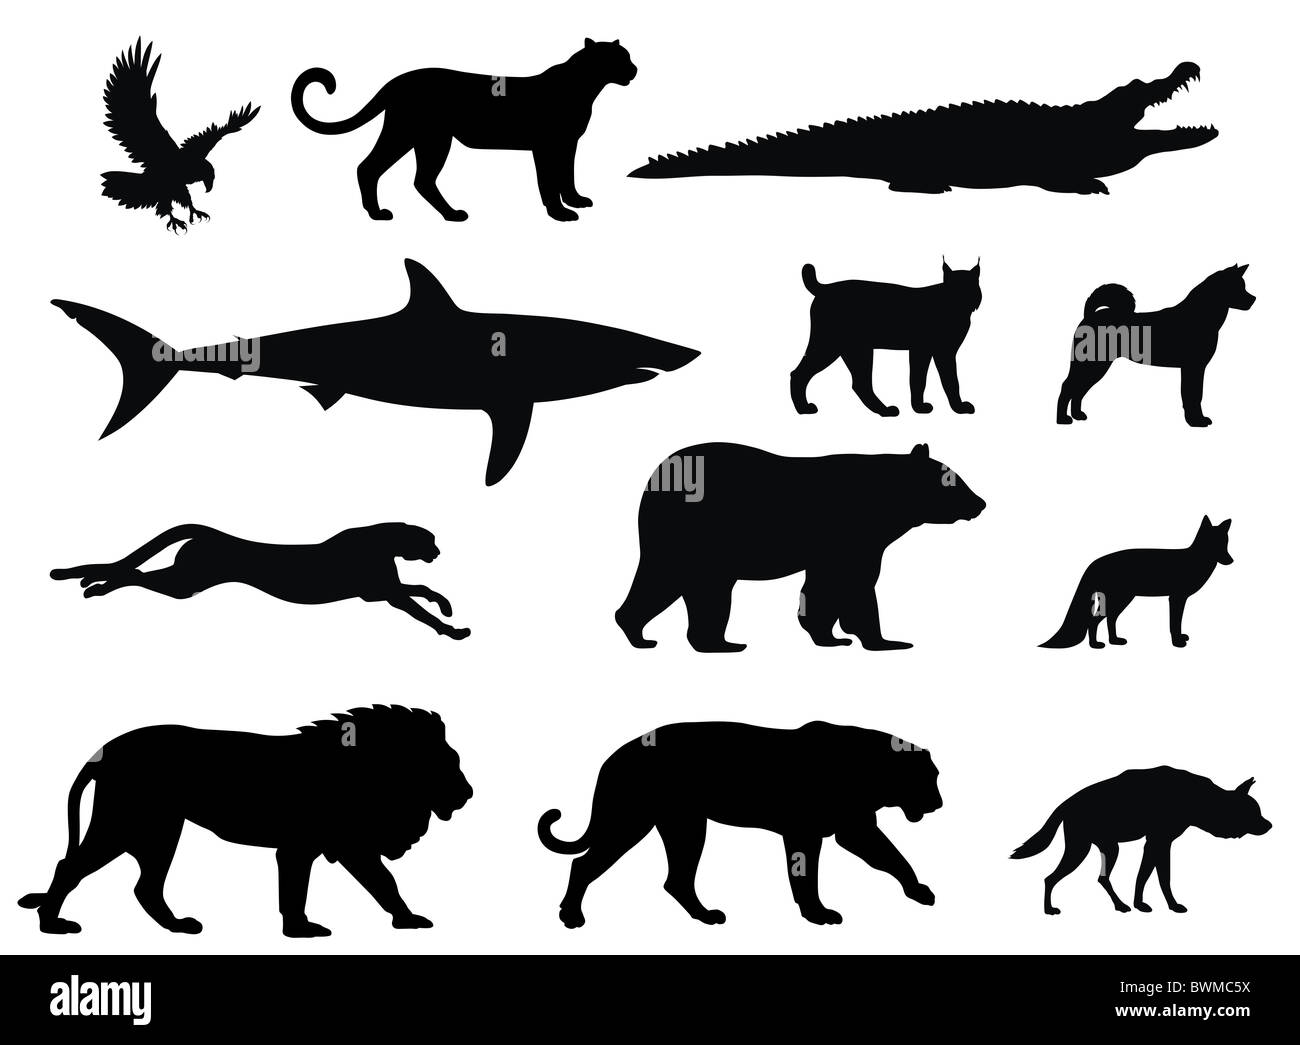 Illustration of predator animal silhouettes Stock Photo - Alamy